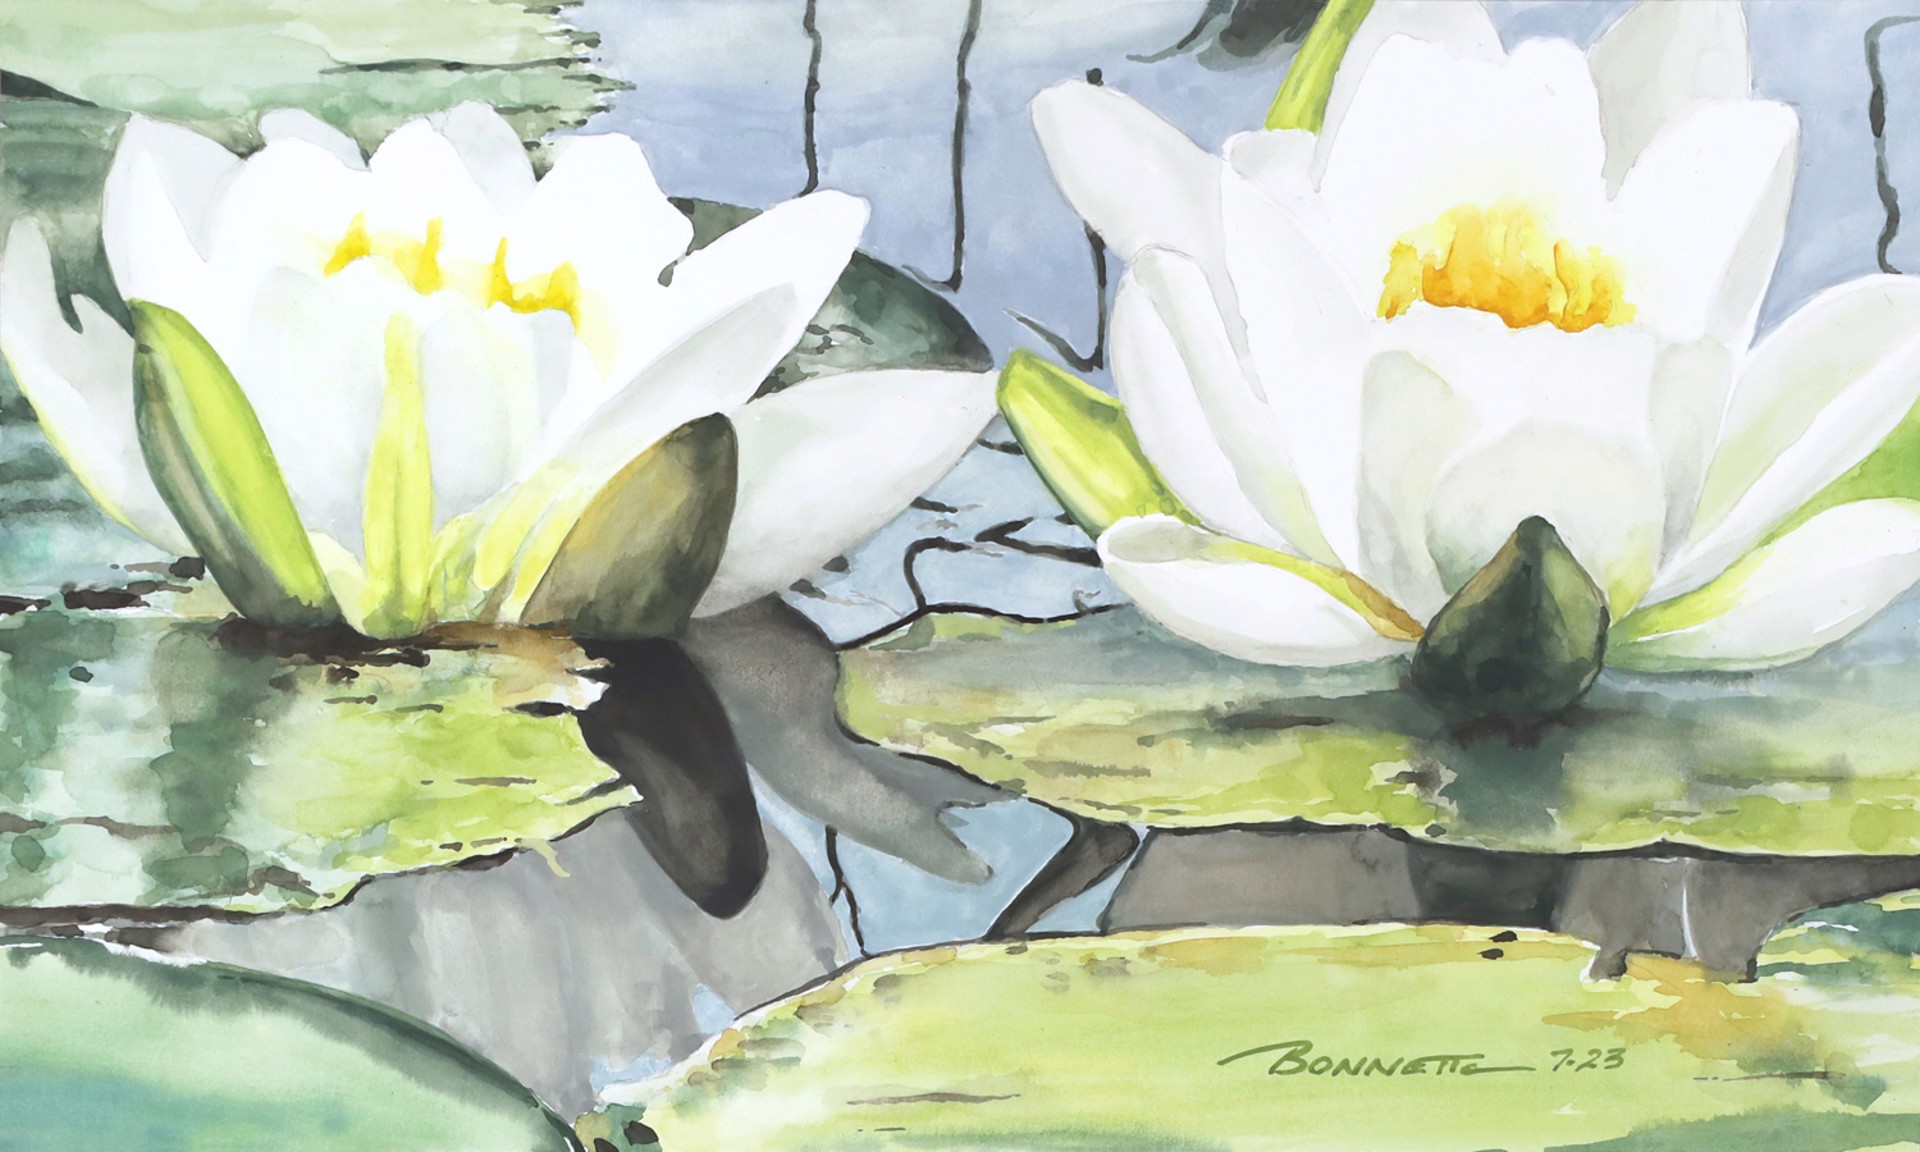 Buntes Water Lilies by Mark Bonnette